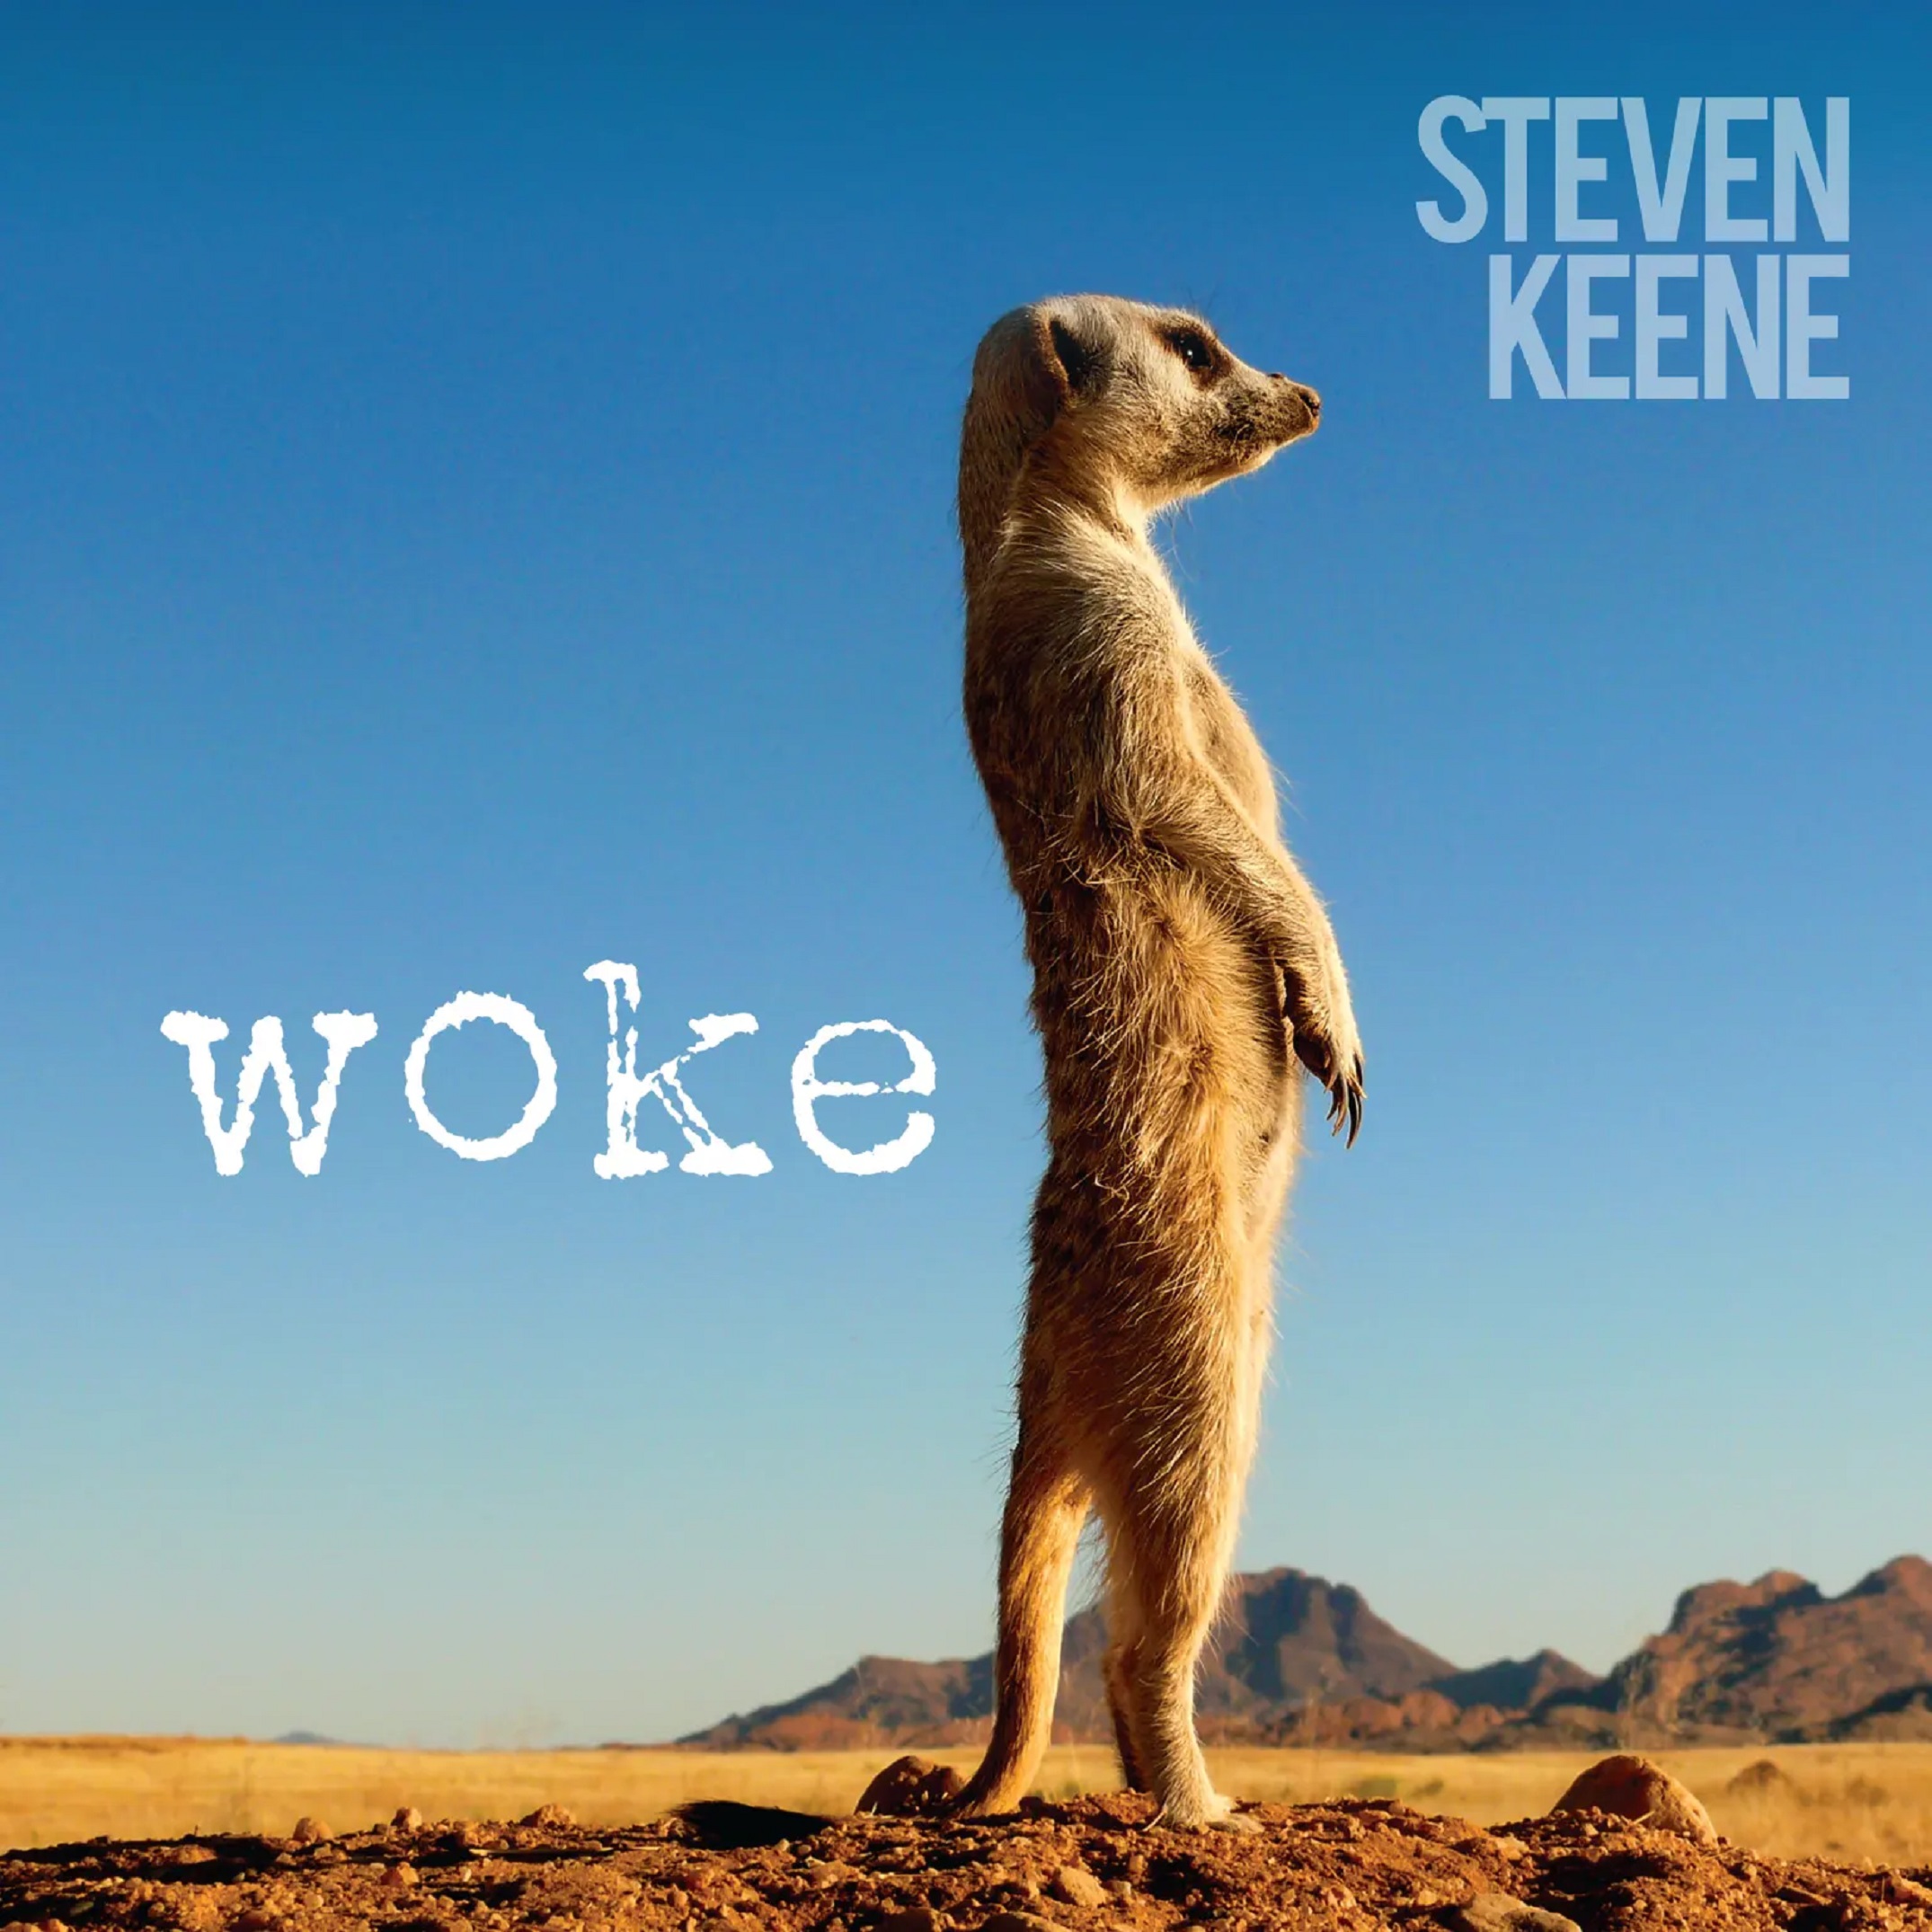 Steven Keene’s latest album Woke to be released Feb 3, 2023